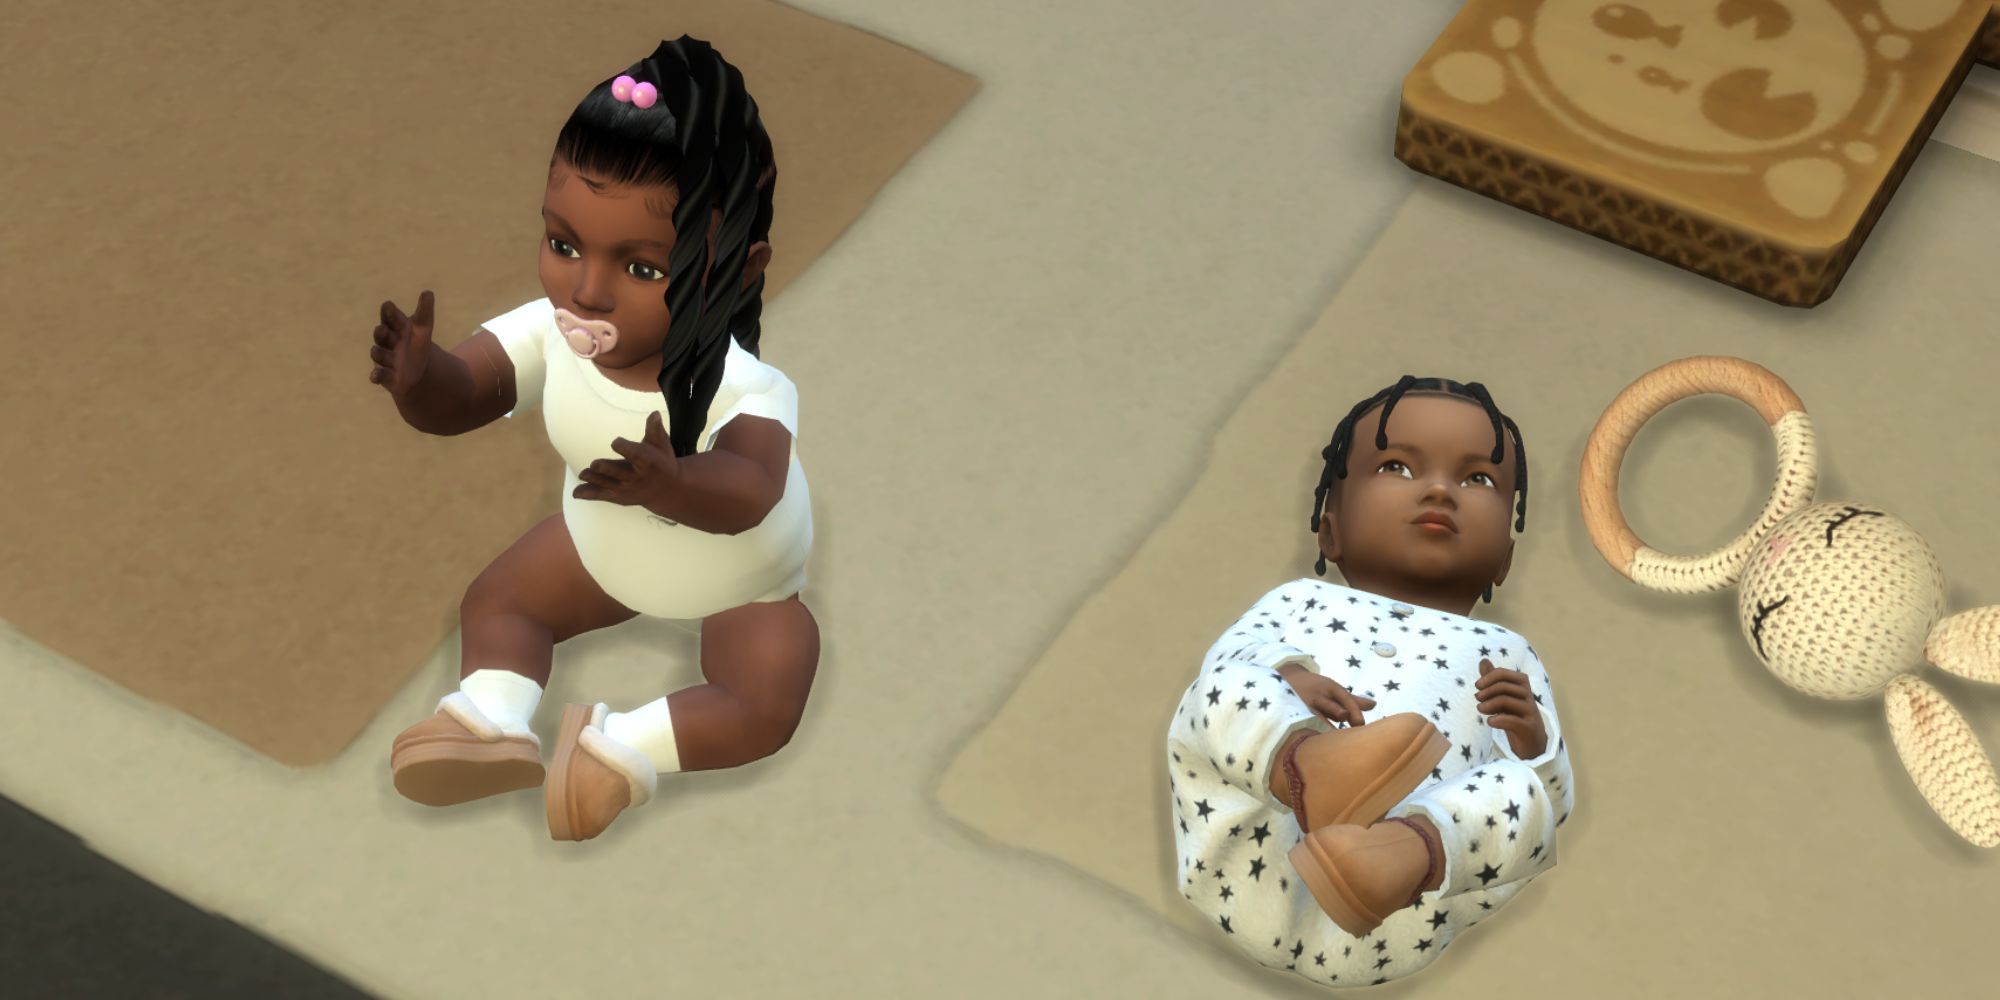 The Sims 4: Best Infant CC